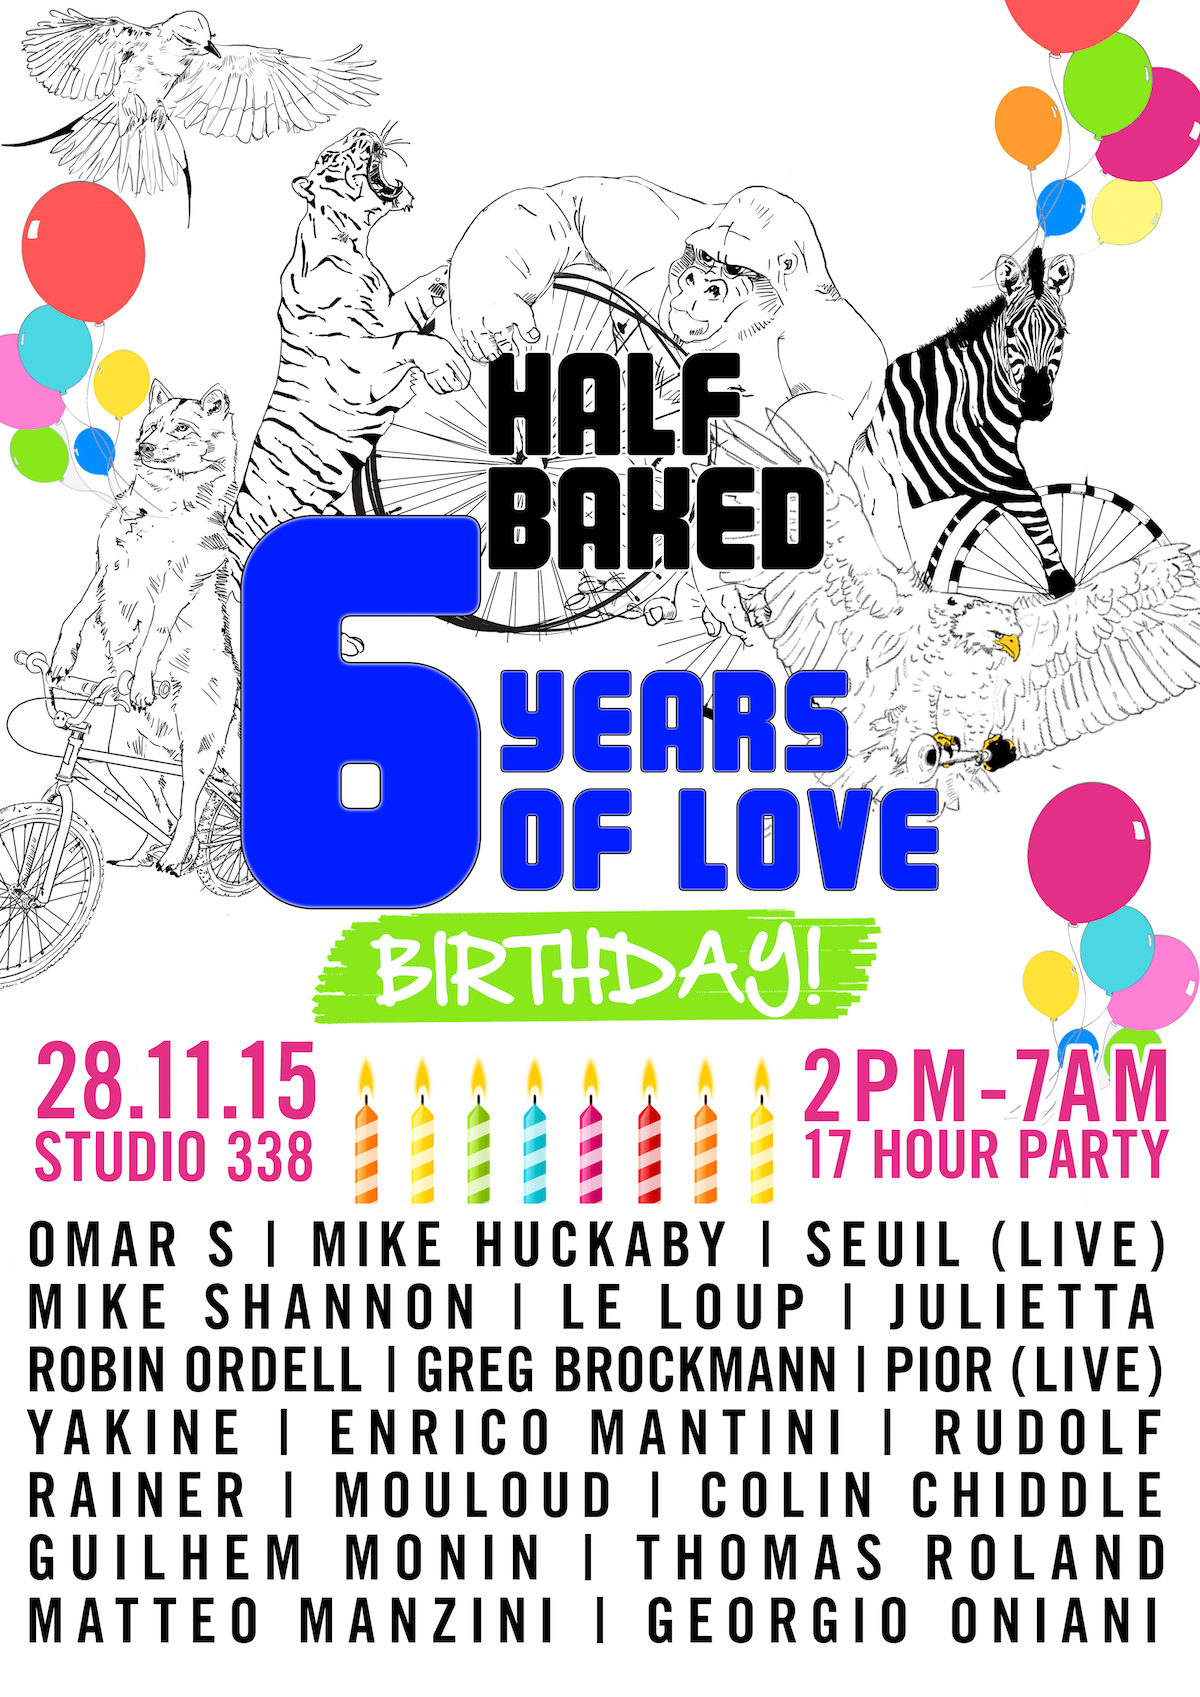 Half Baked’s 6th Birthday – 28.11.15